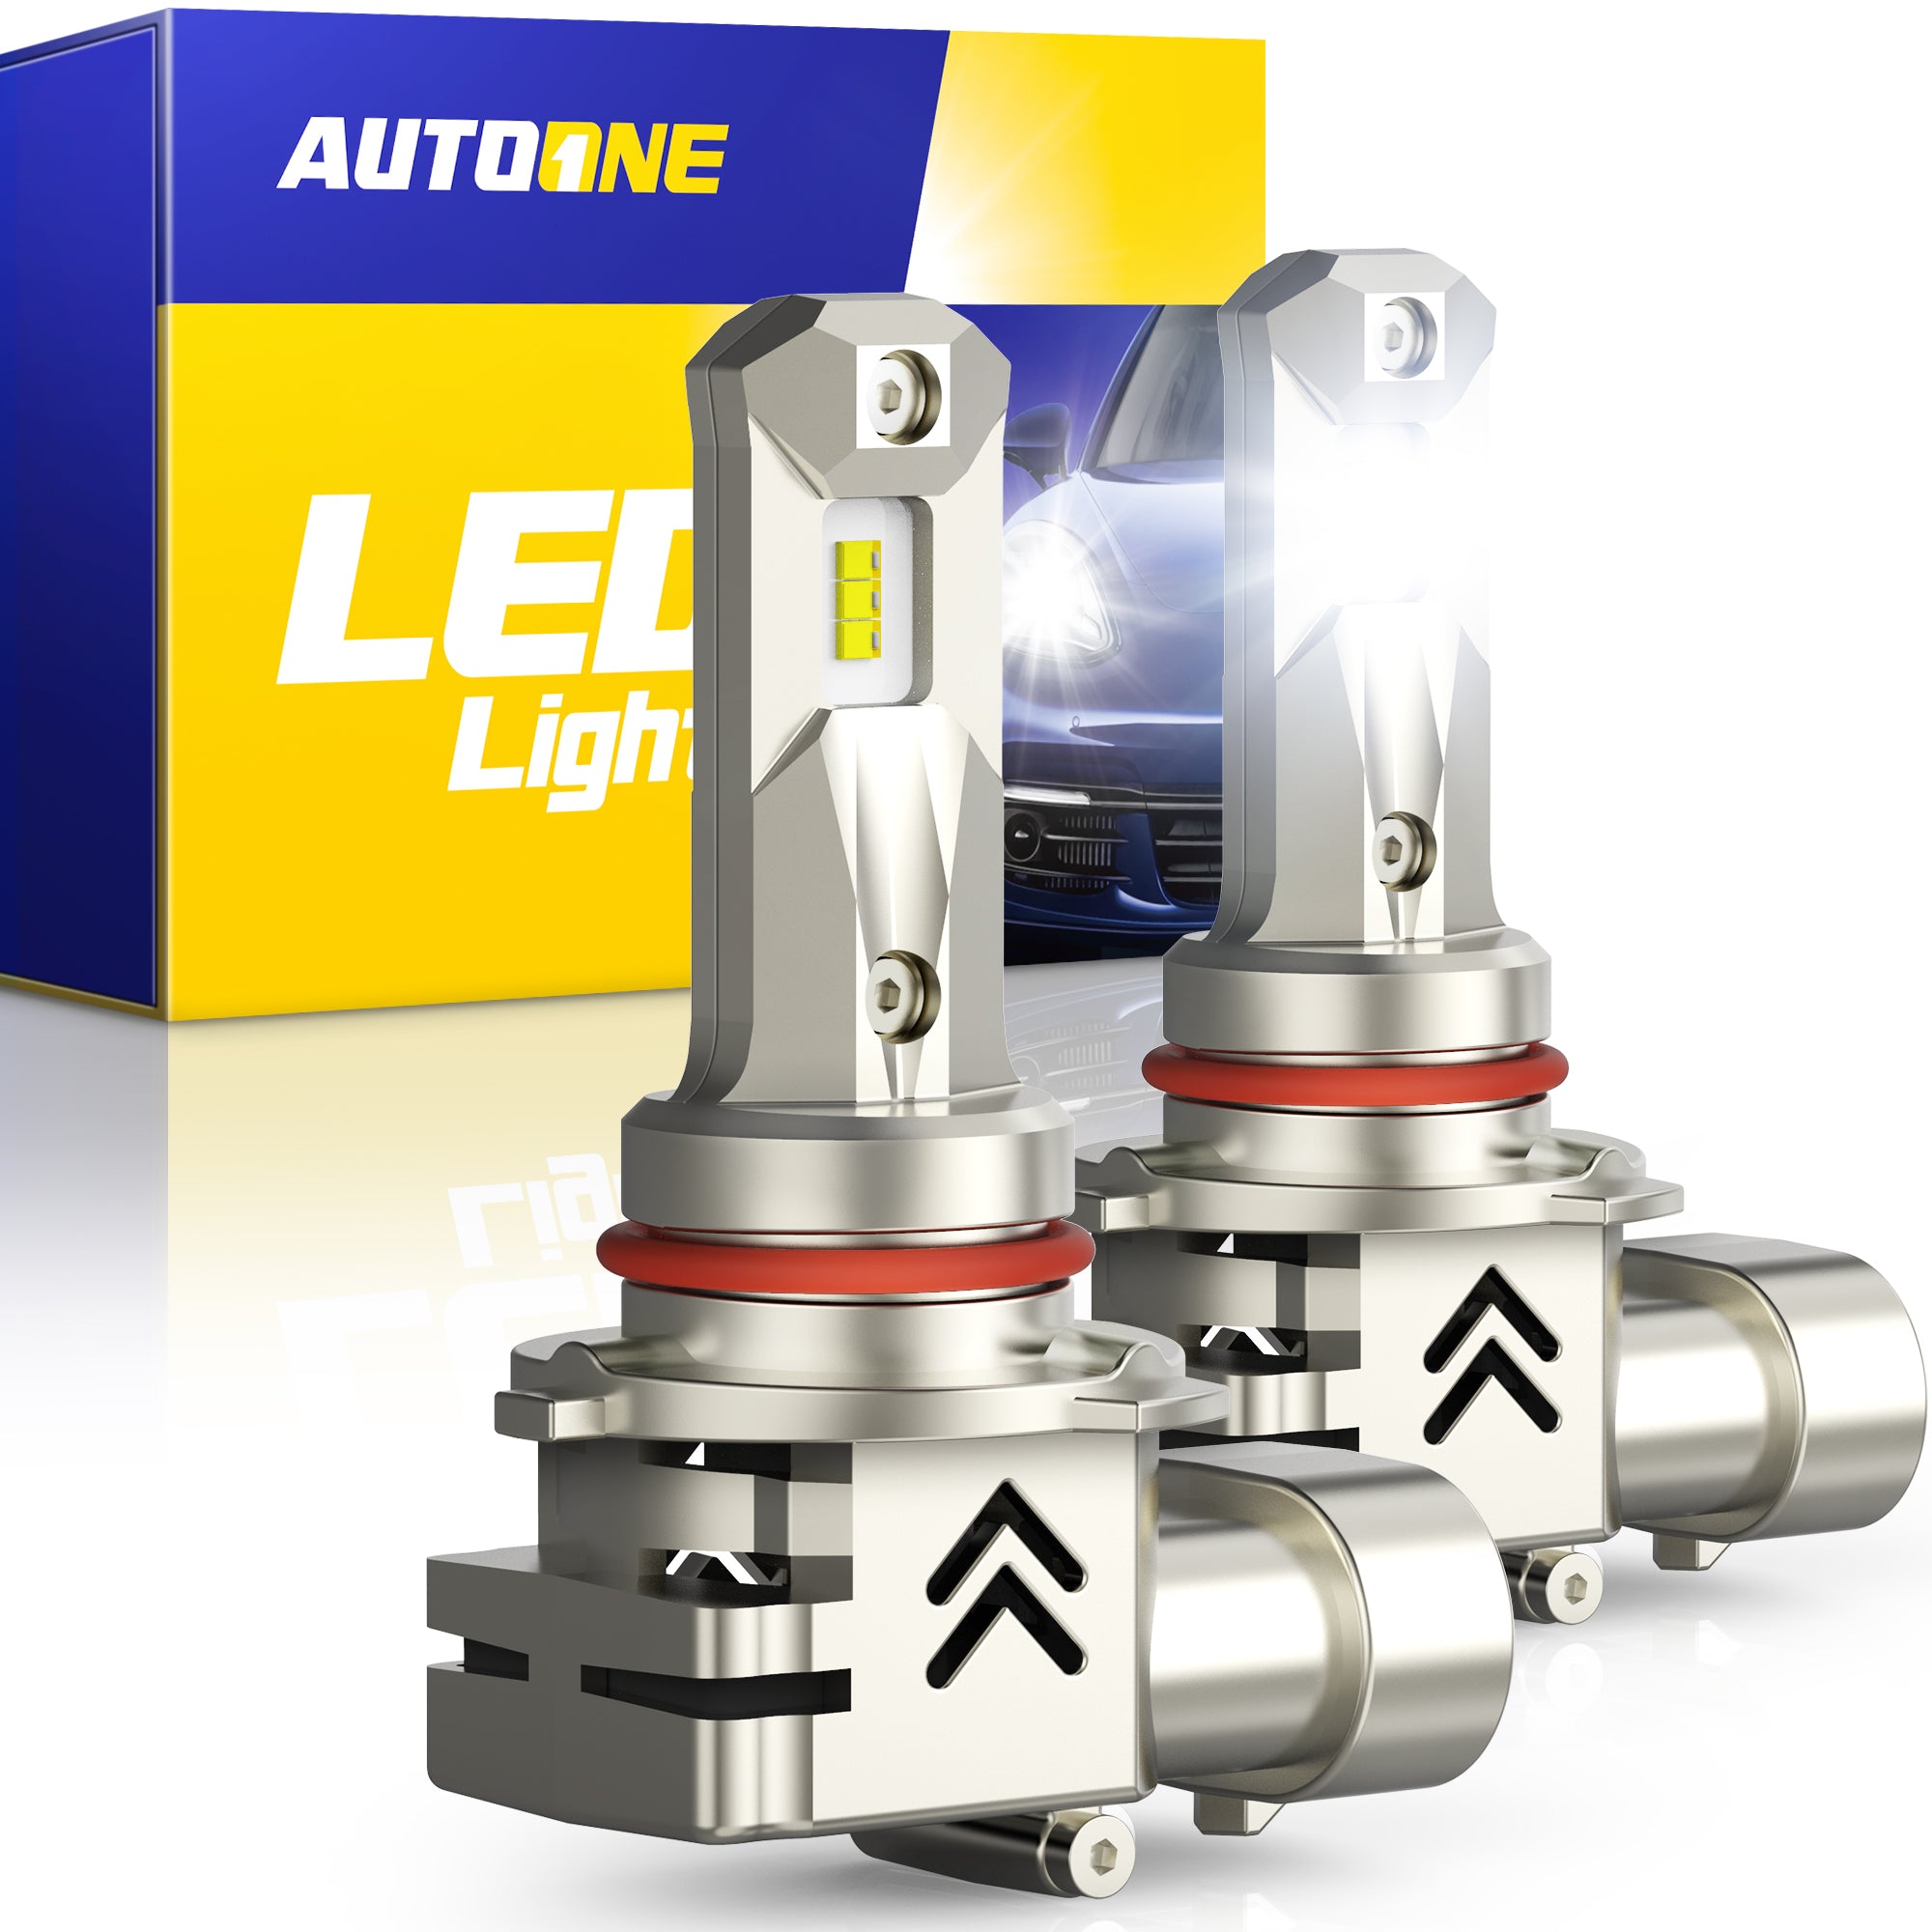 Autoone Headlight Bulb 9005 HB3 LED Headlight Bulbs 14000LM 6000K White 2Pcs